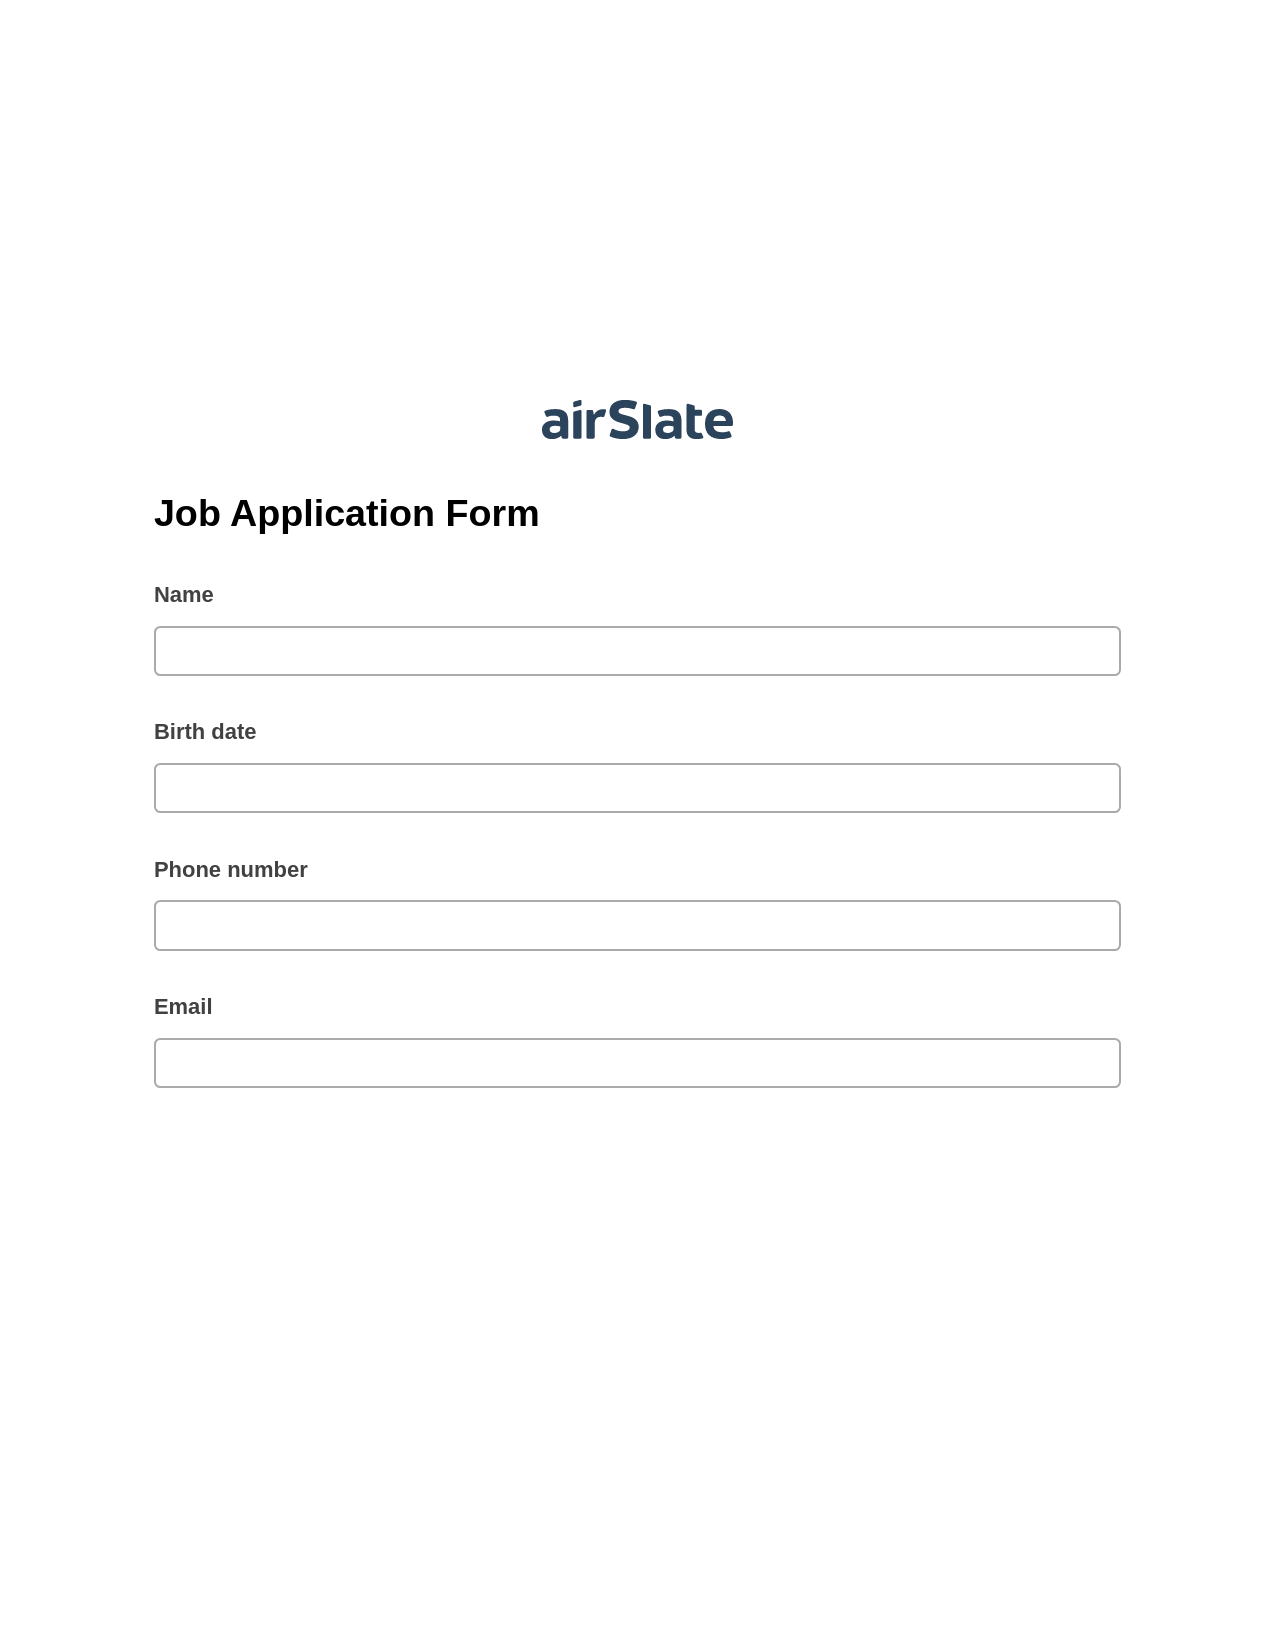 Multirole Job Application Form Pre-fill from Smartsheet Bot, Assign Slate Name Bot, Archive to SharePoint Folder Bot